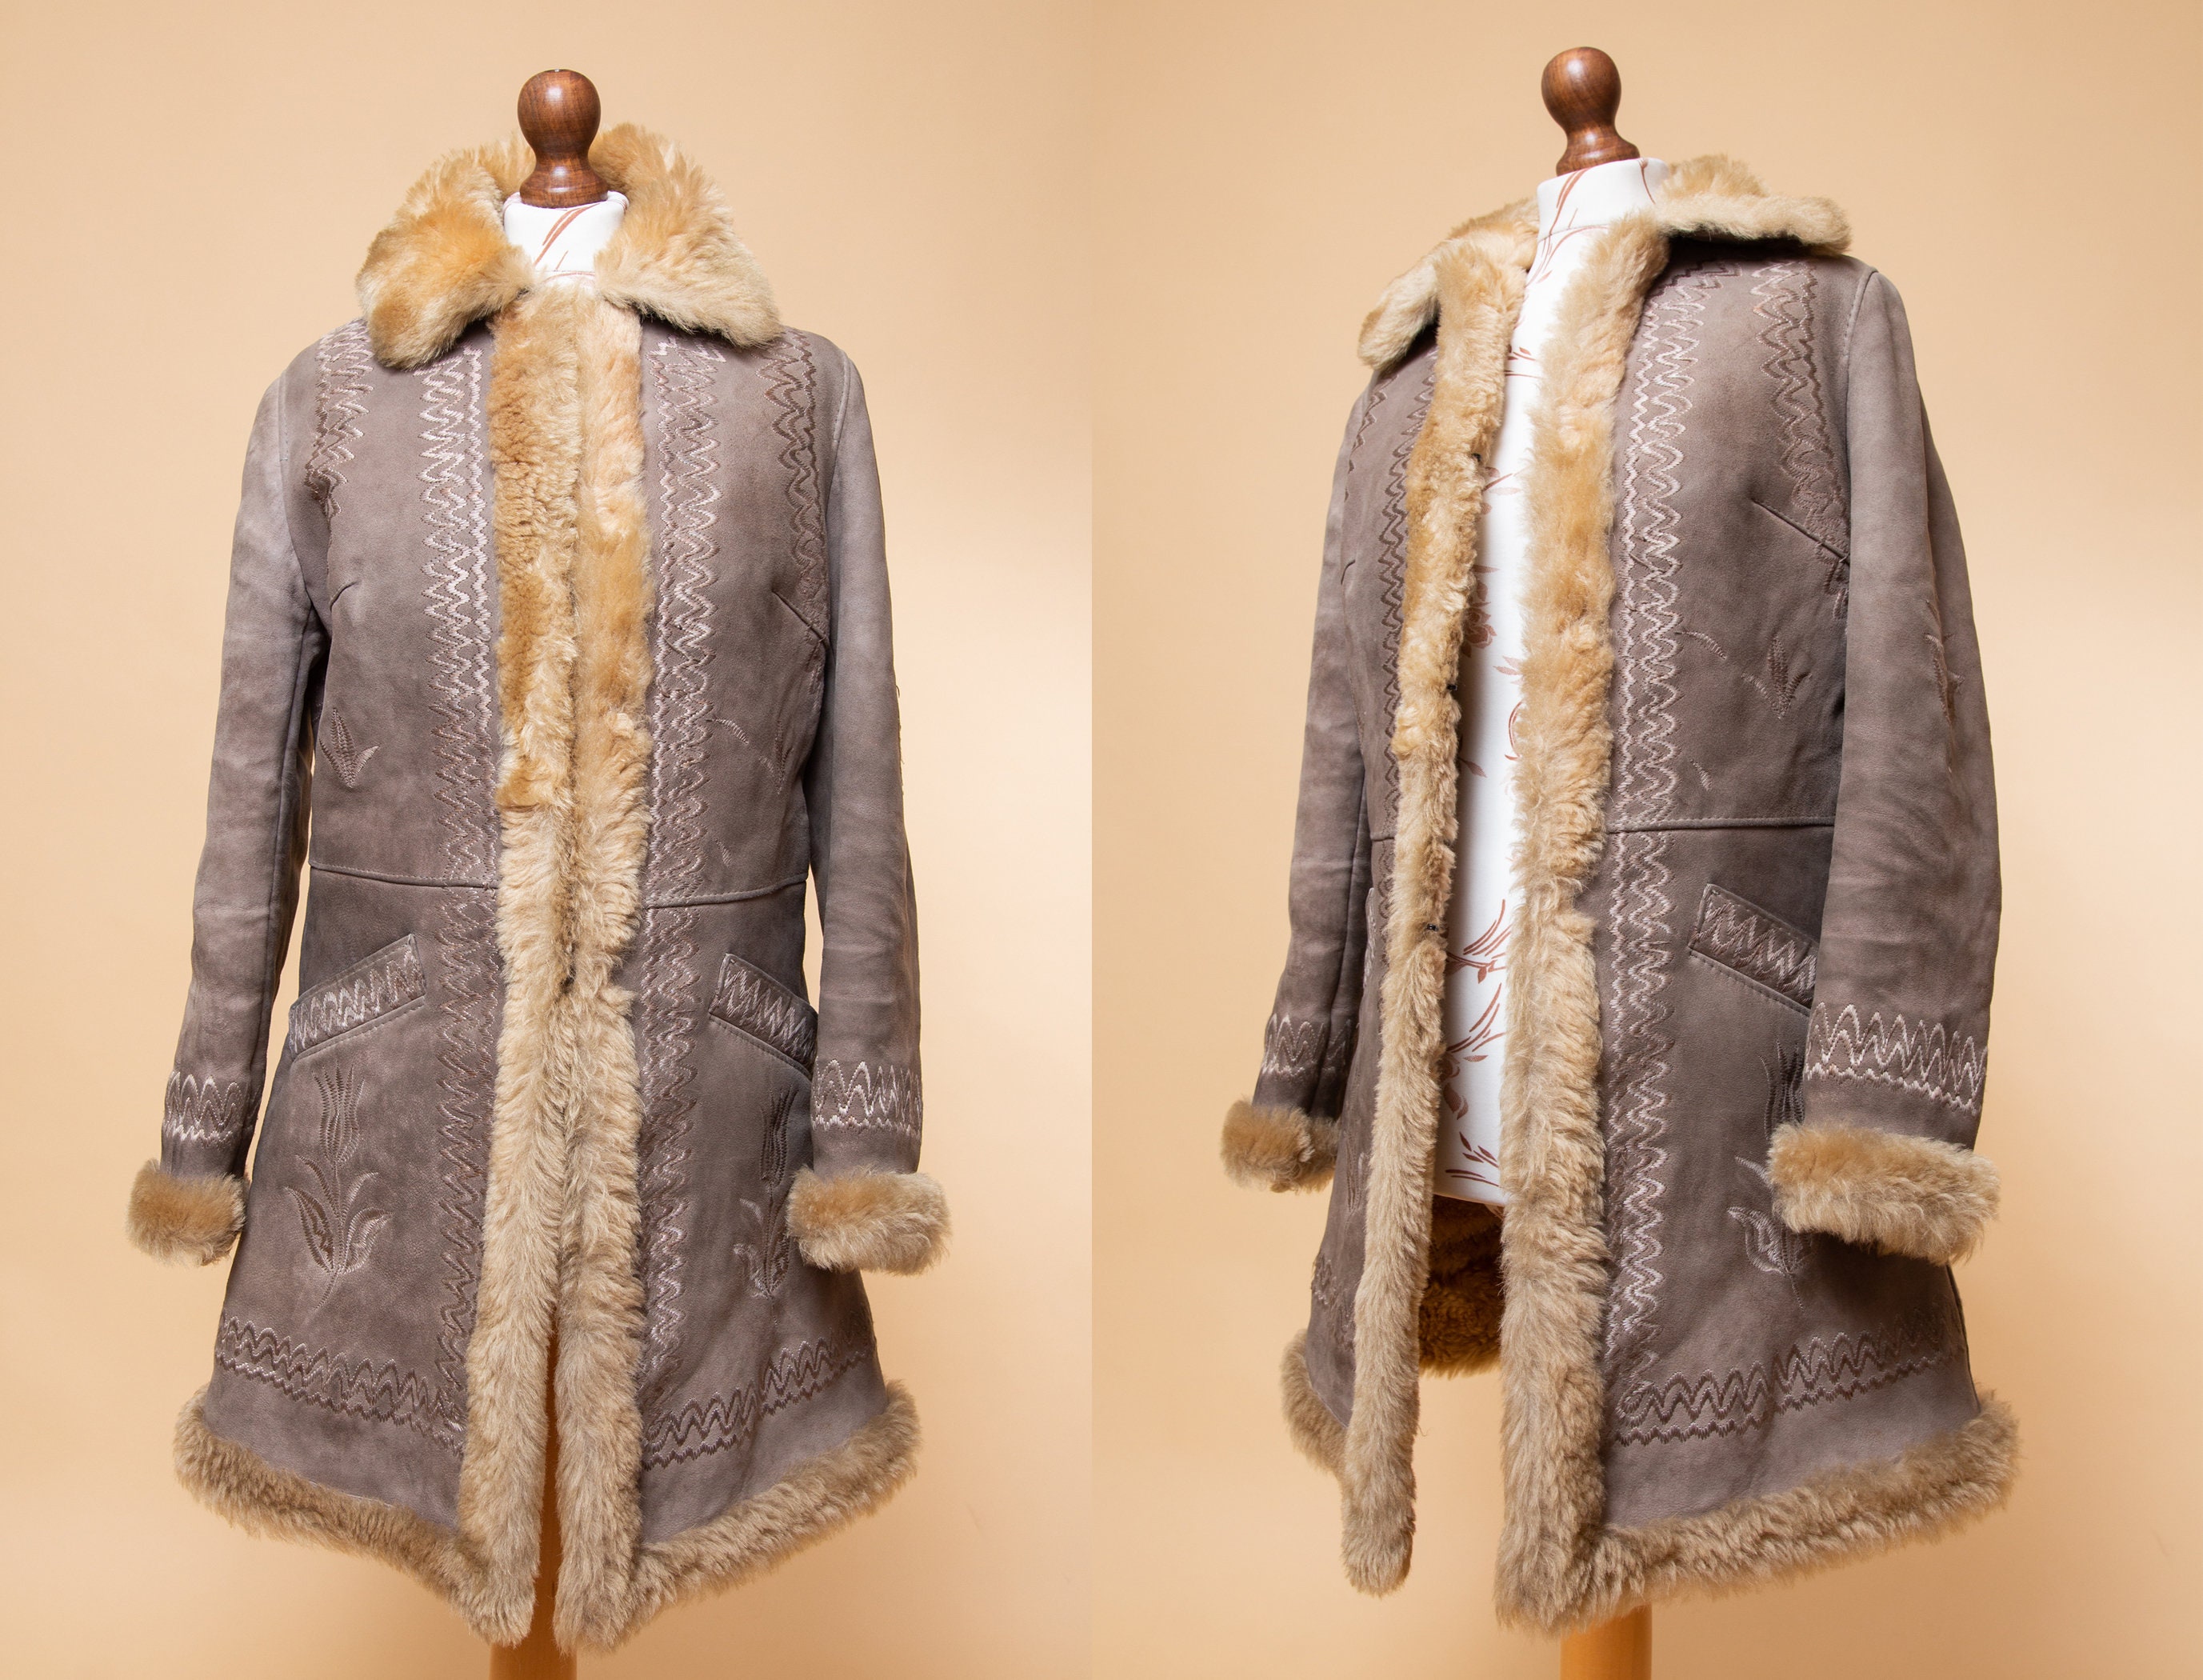 1960s Coats and Jackets Vintage Original 1960s Woodstock Sheepskin Shearling Hippy Afghan Coat With The Most Amazing Floral Embroidered Design. Penny Lane Coat $296.34 AT vintagedancer.com